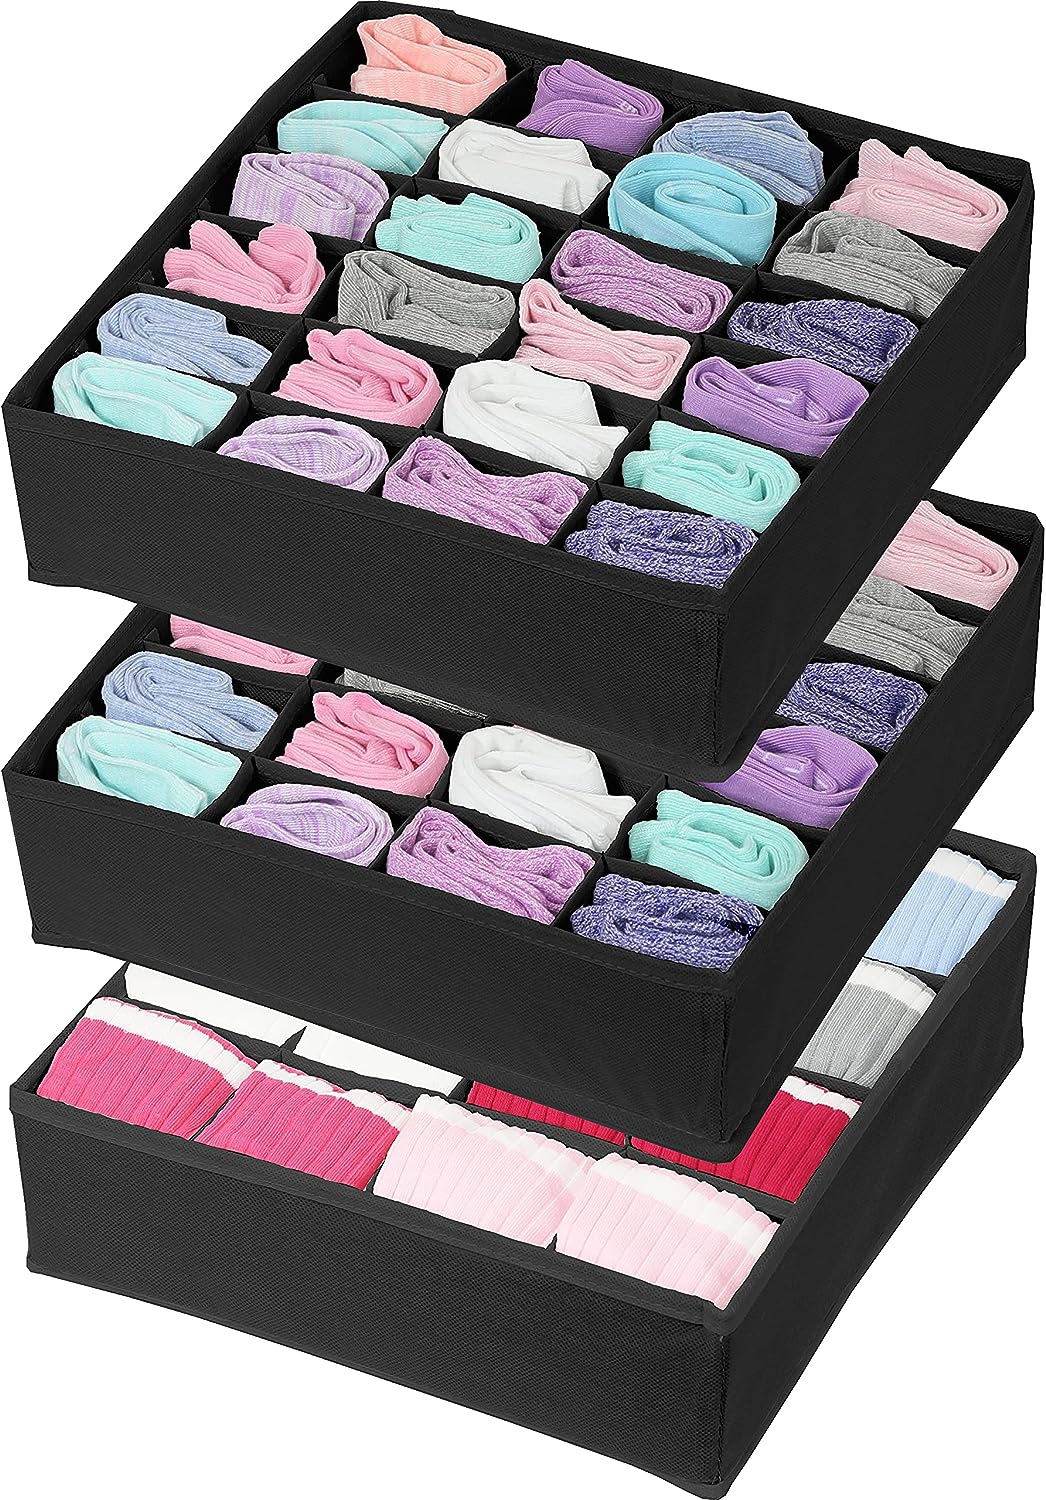 Blushbees® 24 Cell Drawer Divider, 2-Pack Closet Socks Organizer